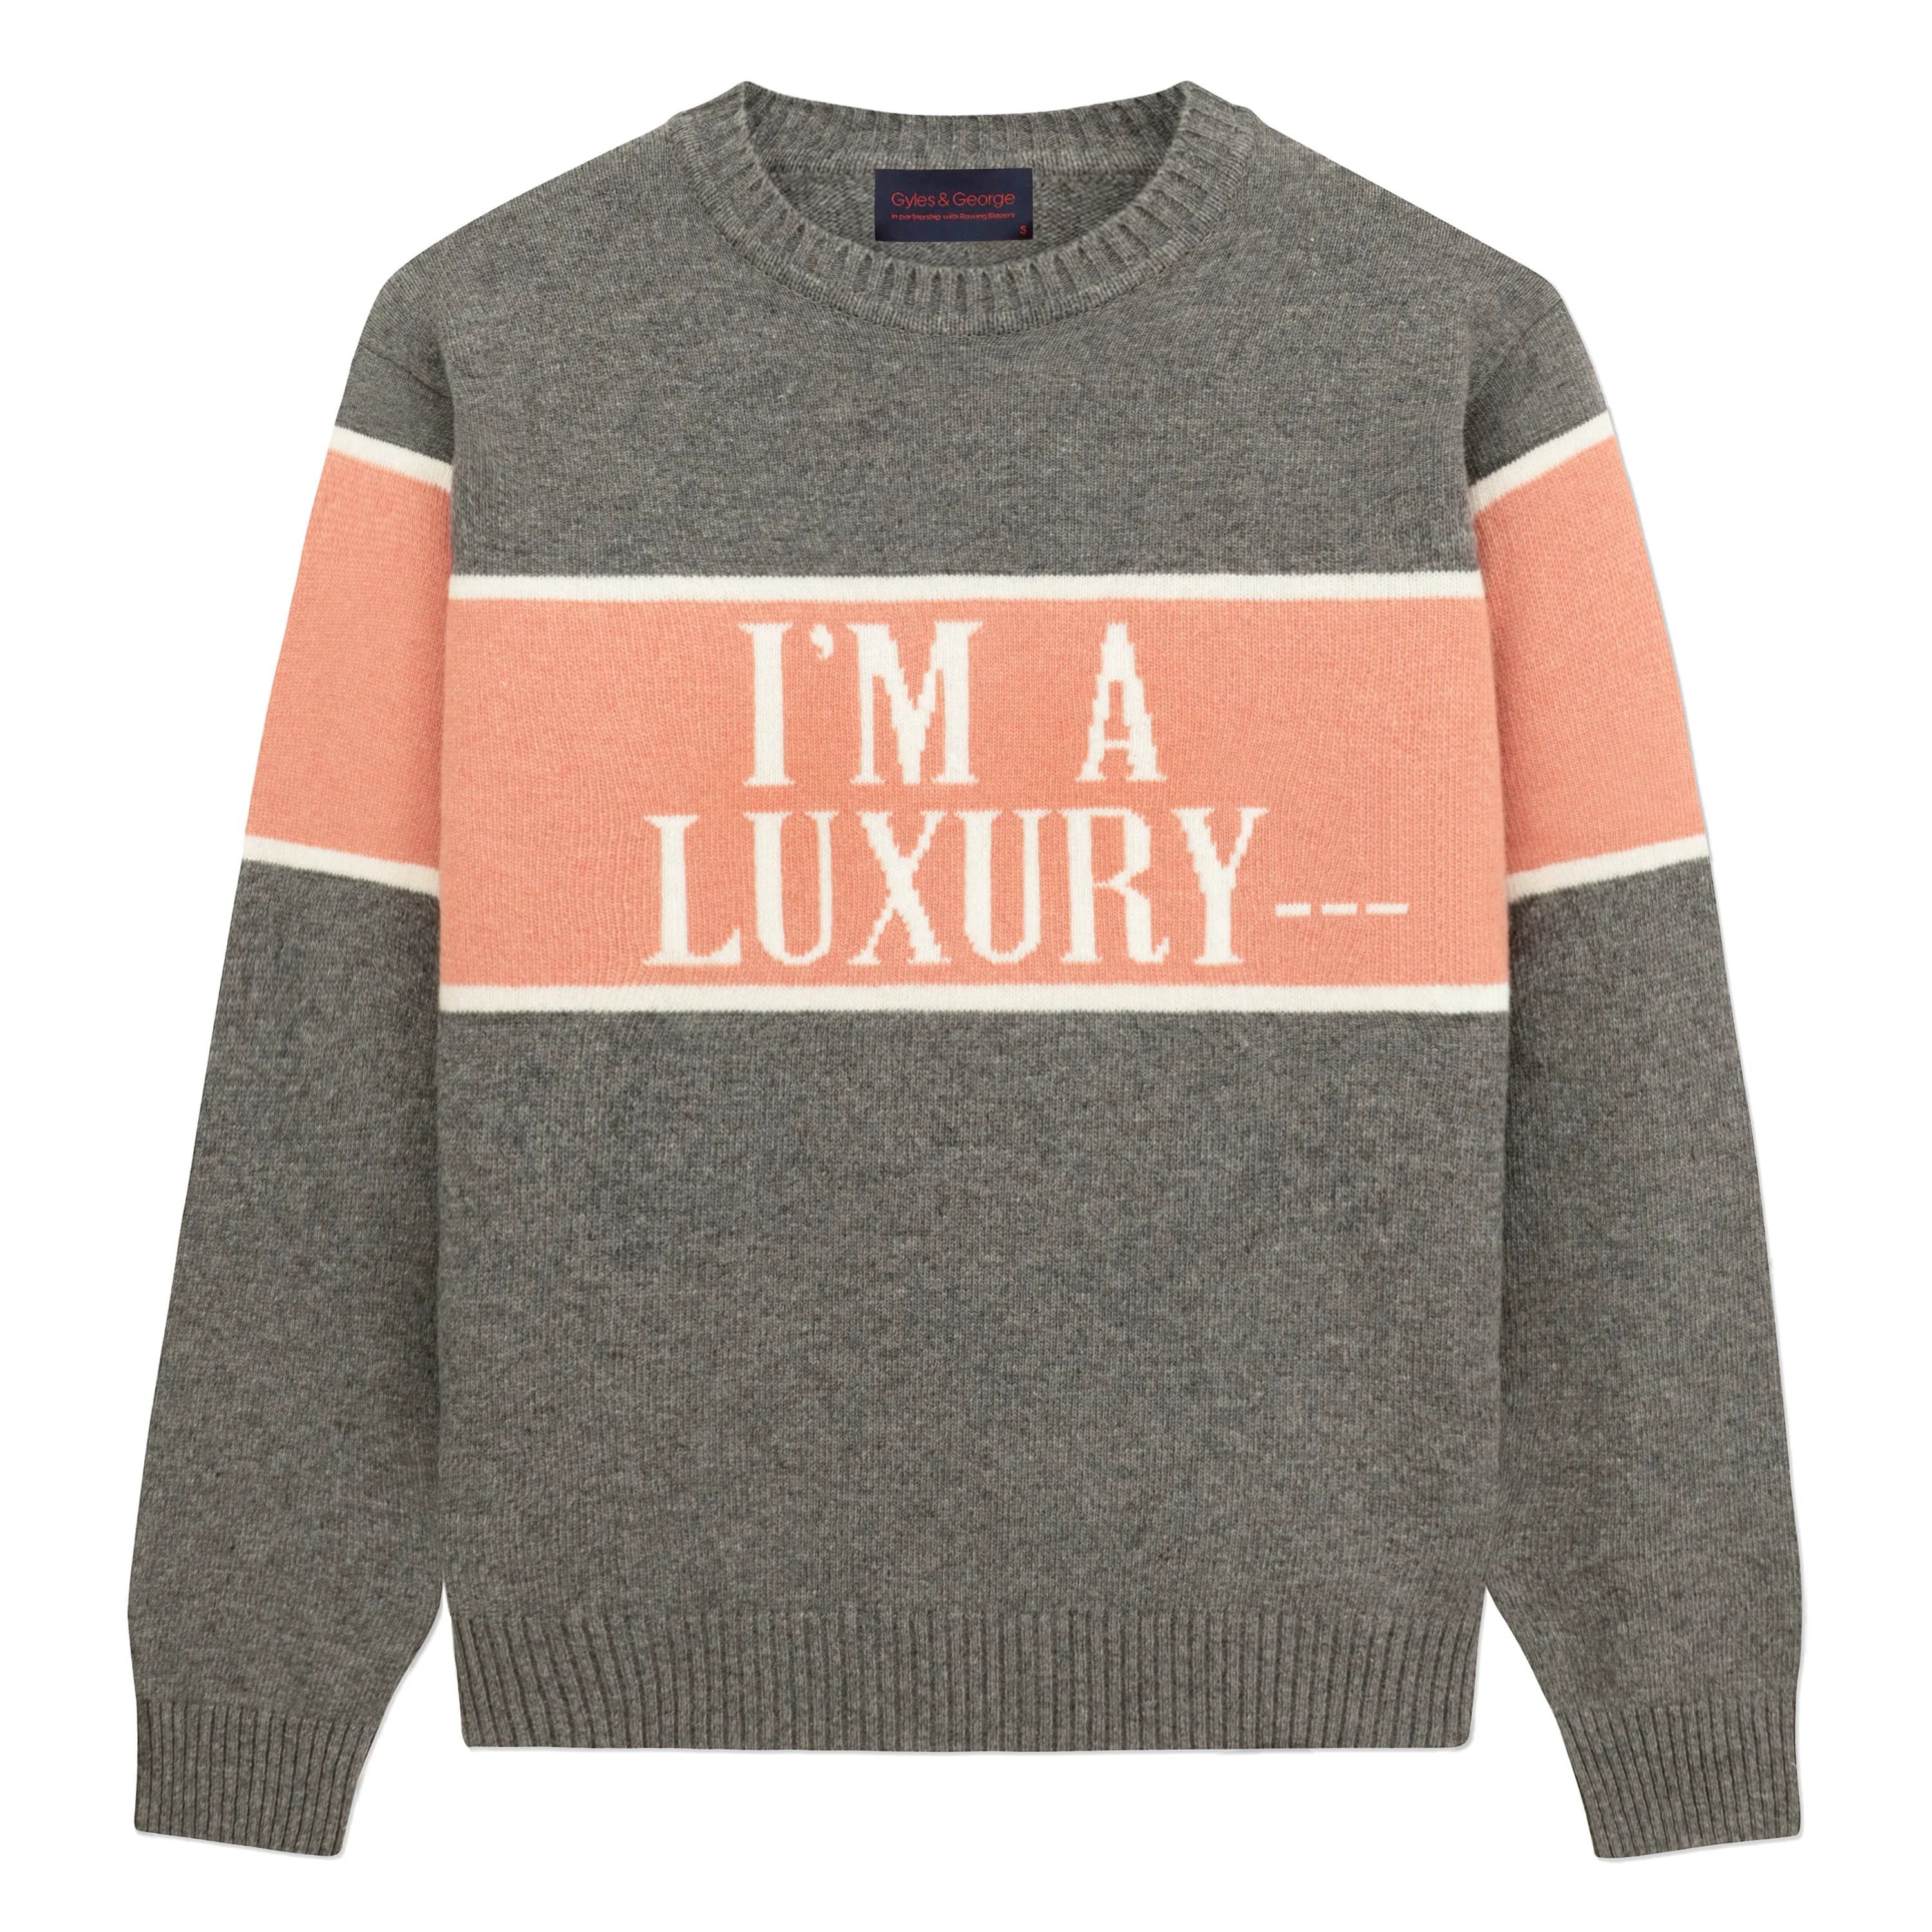 Gyles & George Men's "I'm a Luxury" Sweater